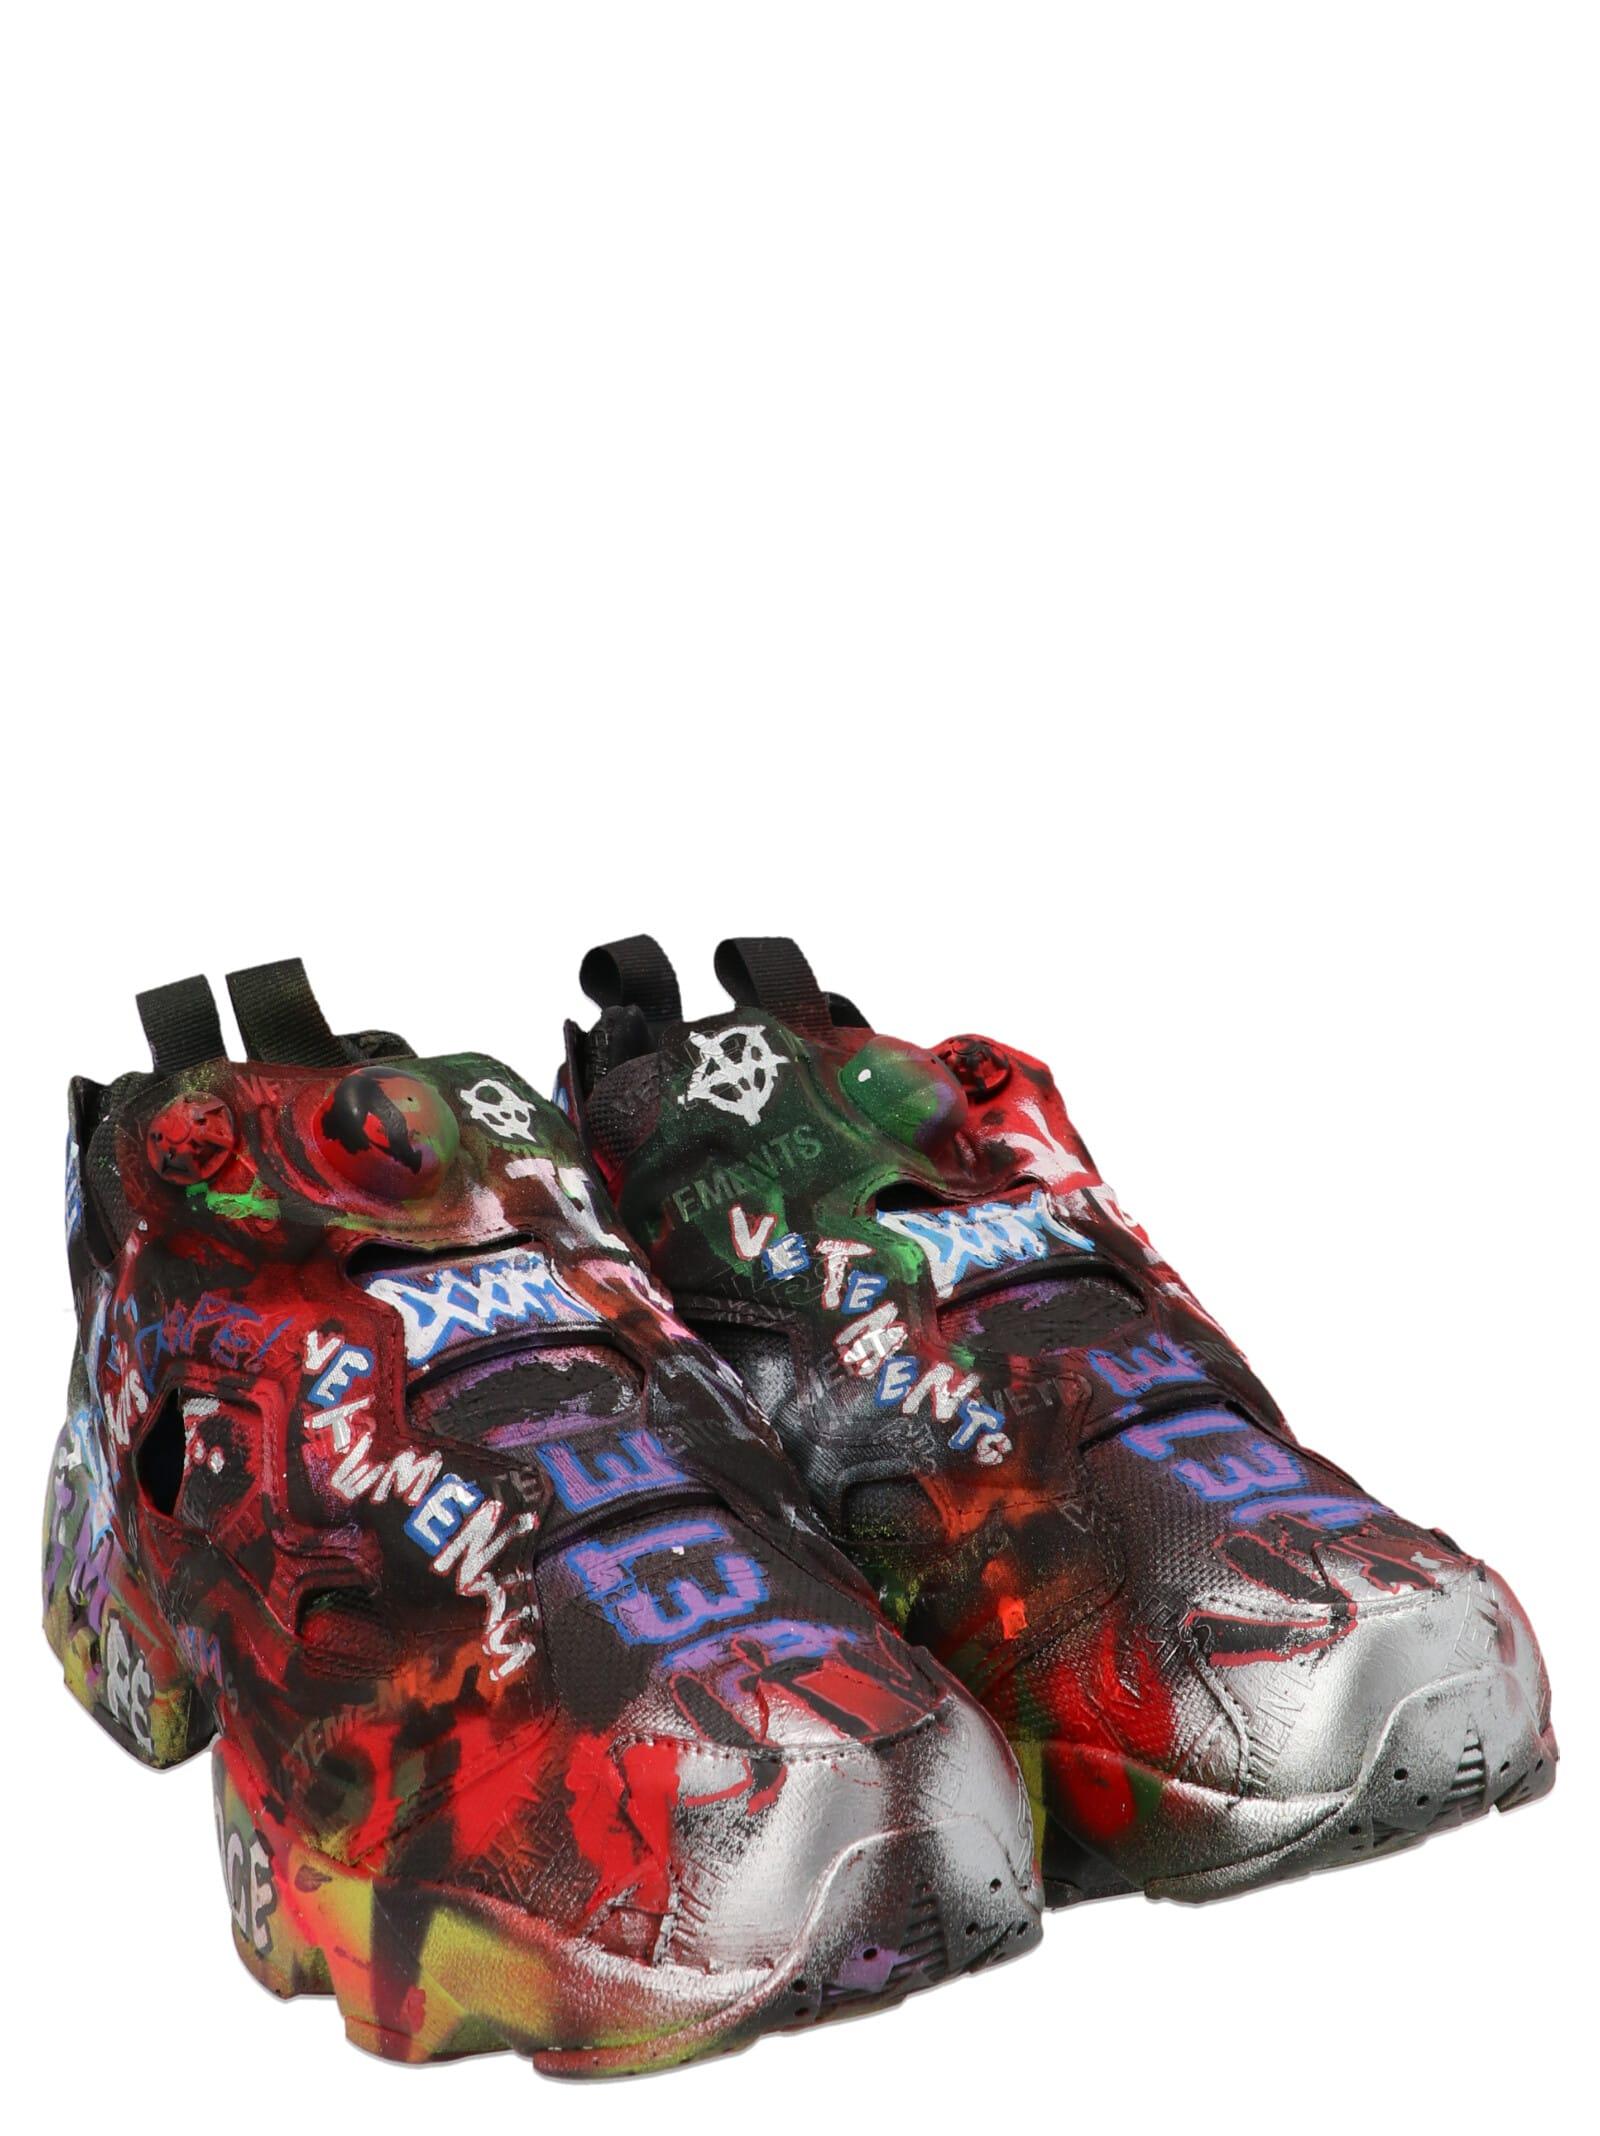 Vetements Synthetic Graffiti Hand Painted Instapump Fury X Reebok Sneakers  - Save 21% | Lyst